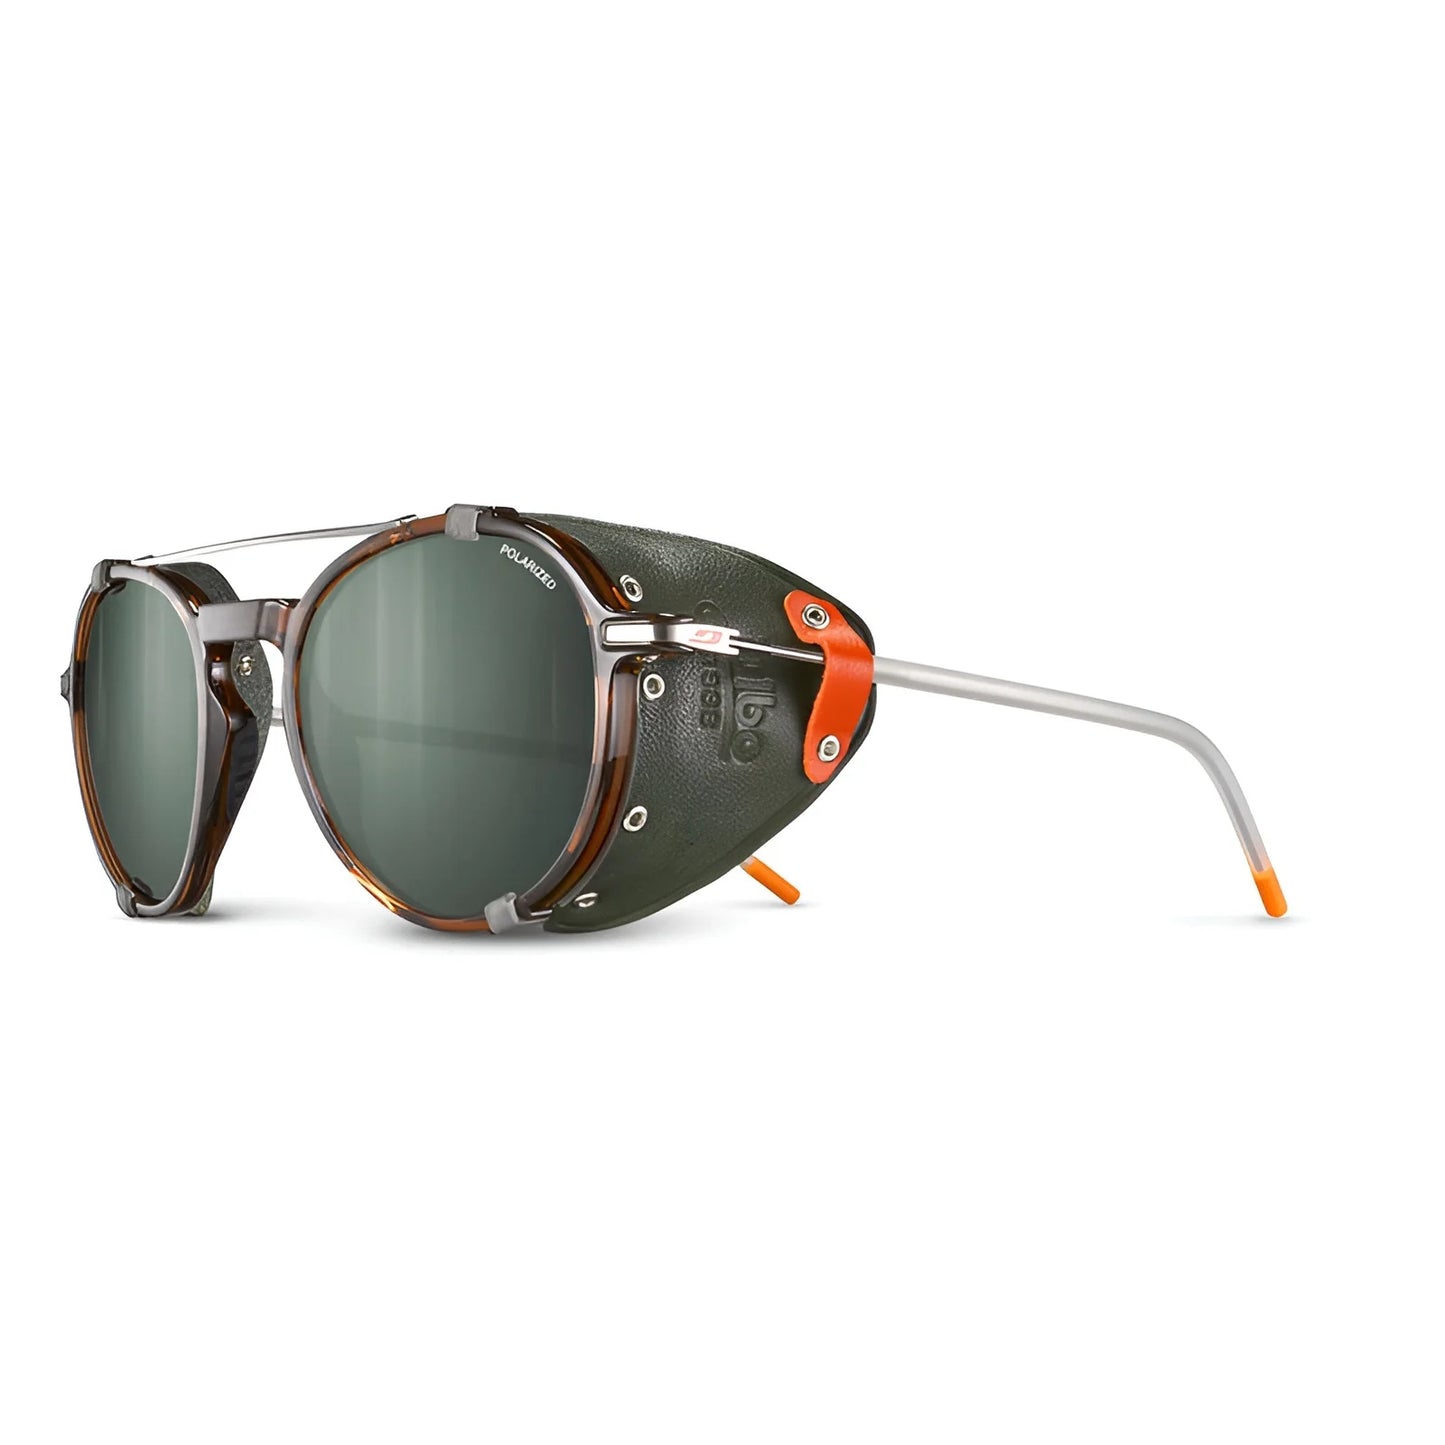 Julbo Legacy Sunglasses Brown / Orange / Spectron 3 Polarized (VLT 12%)